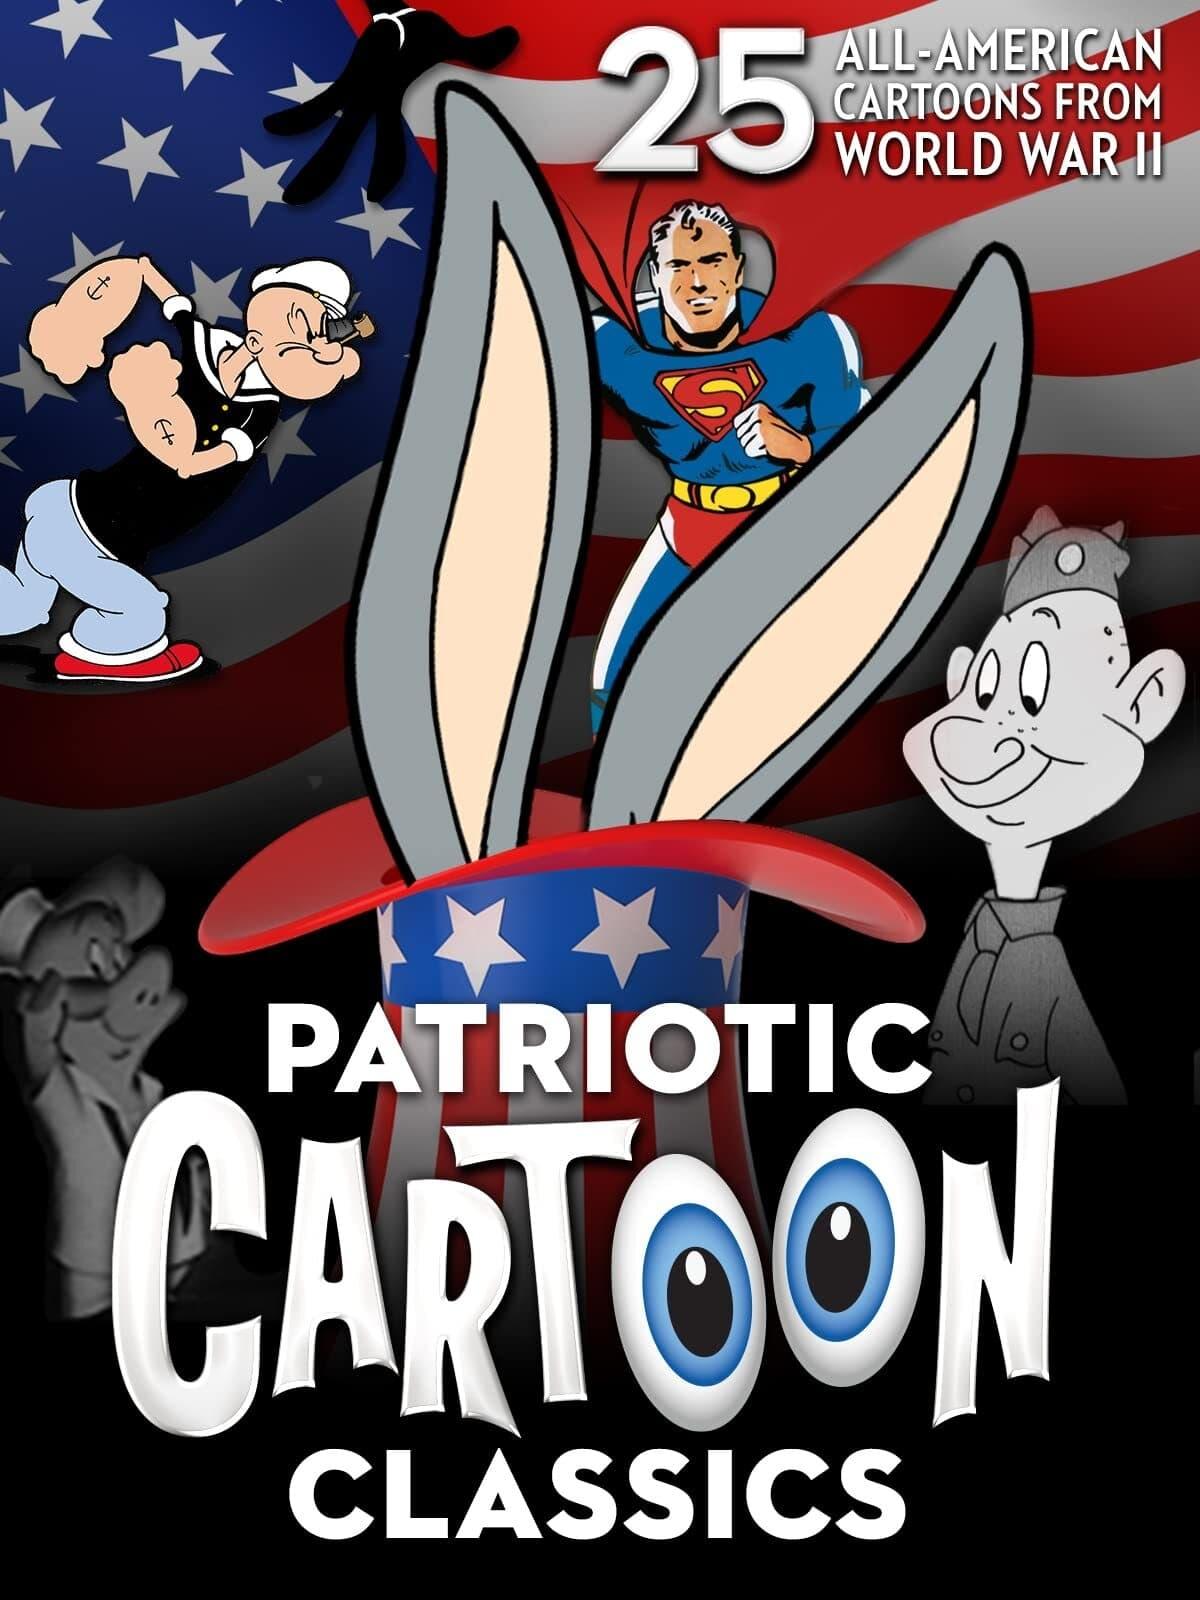 Patriotic Cartoon Classics: 25 All-American Cartoons from World War II poster